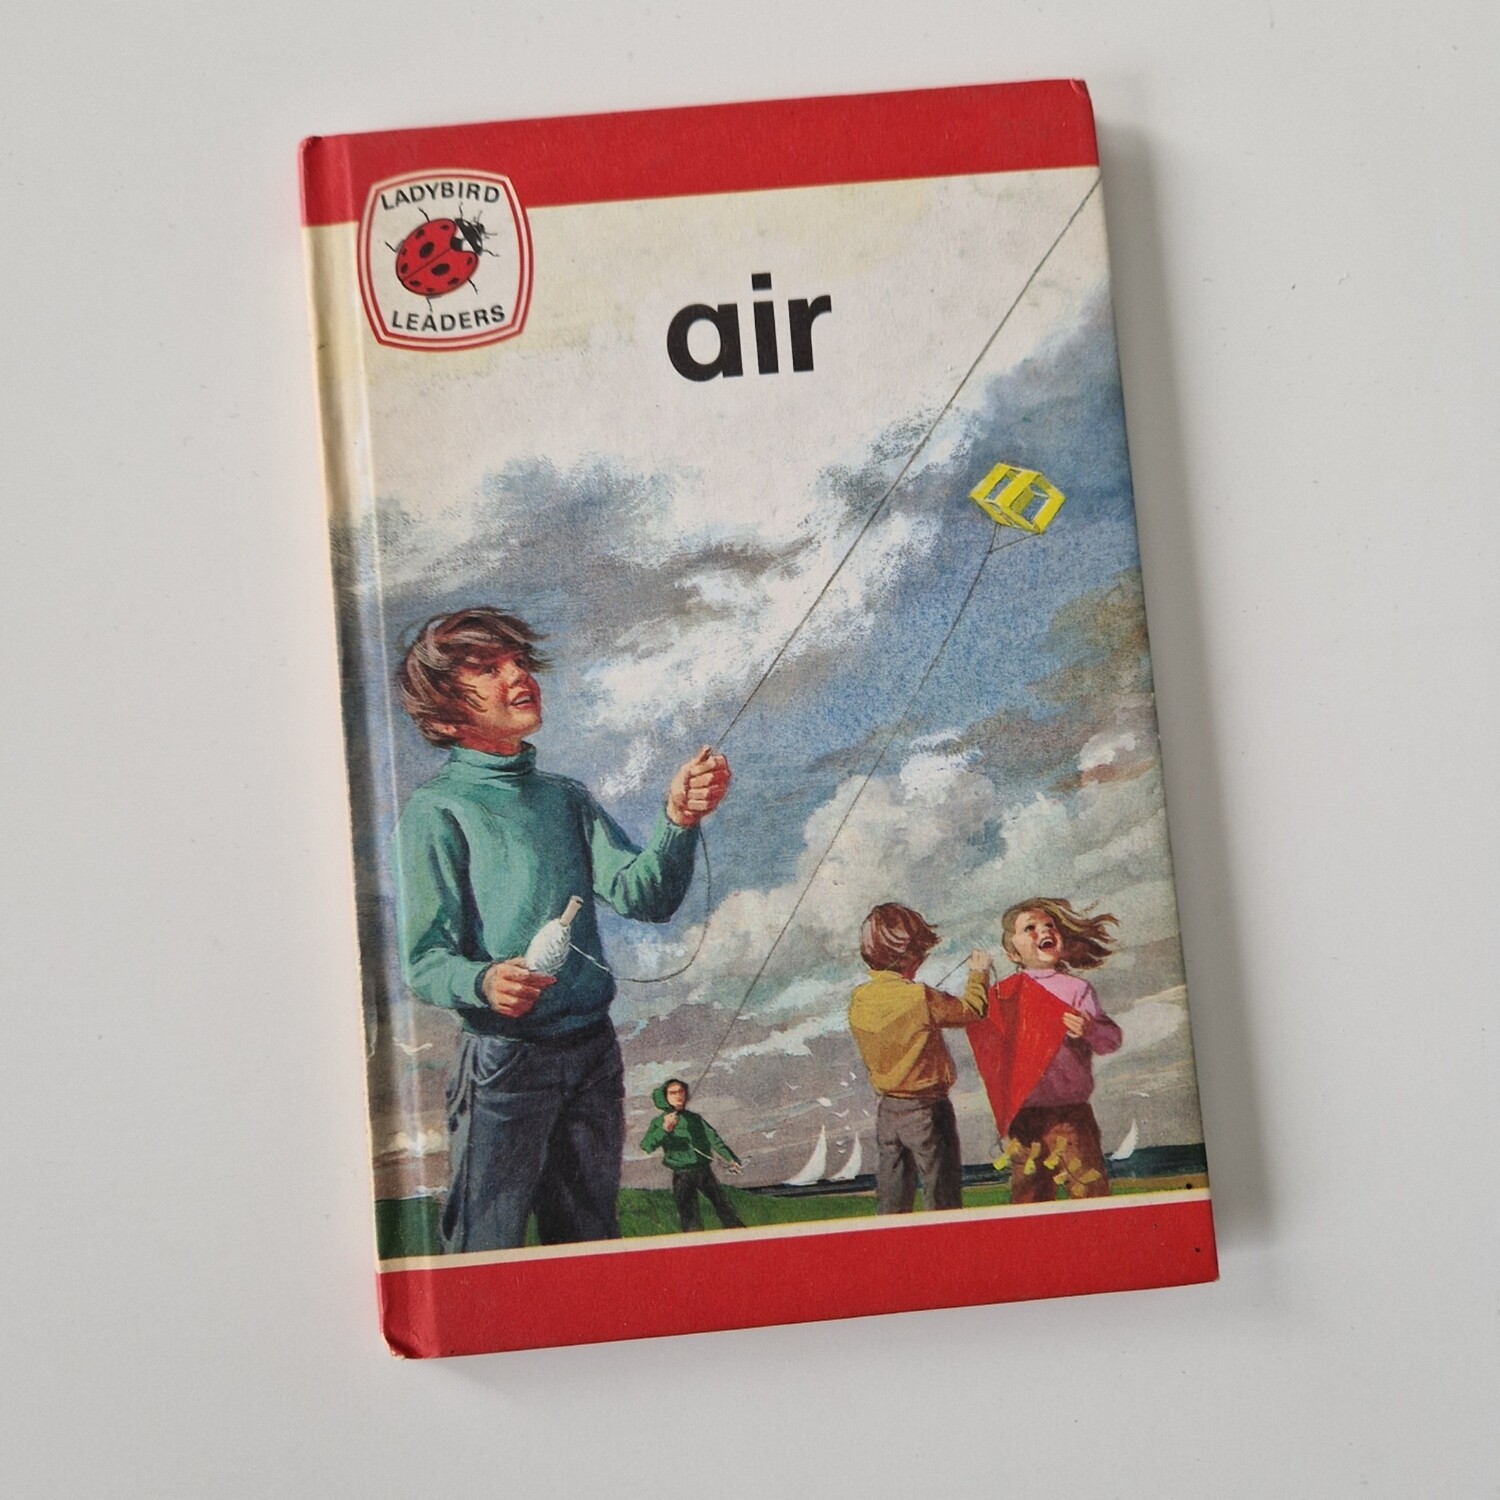 Air  - Ladybird book 1975,  kite, wind , Peter and Jane